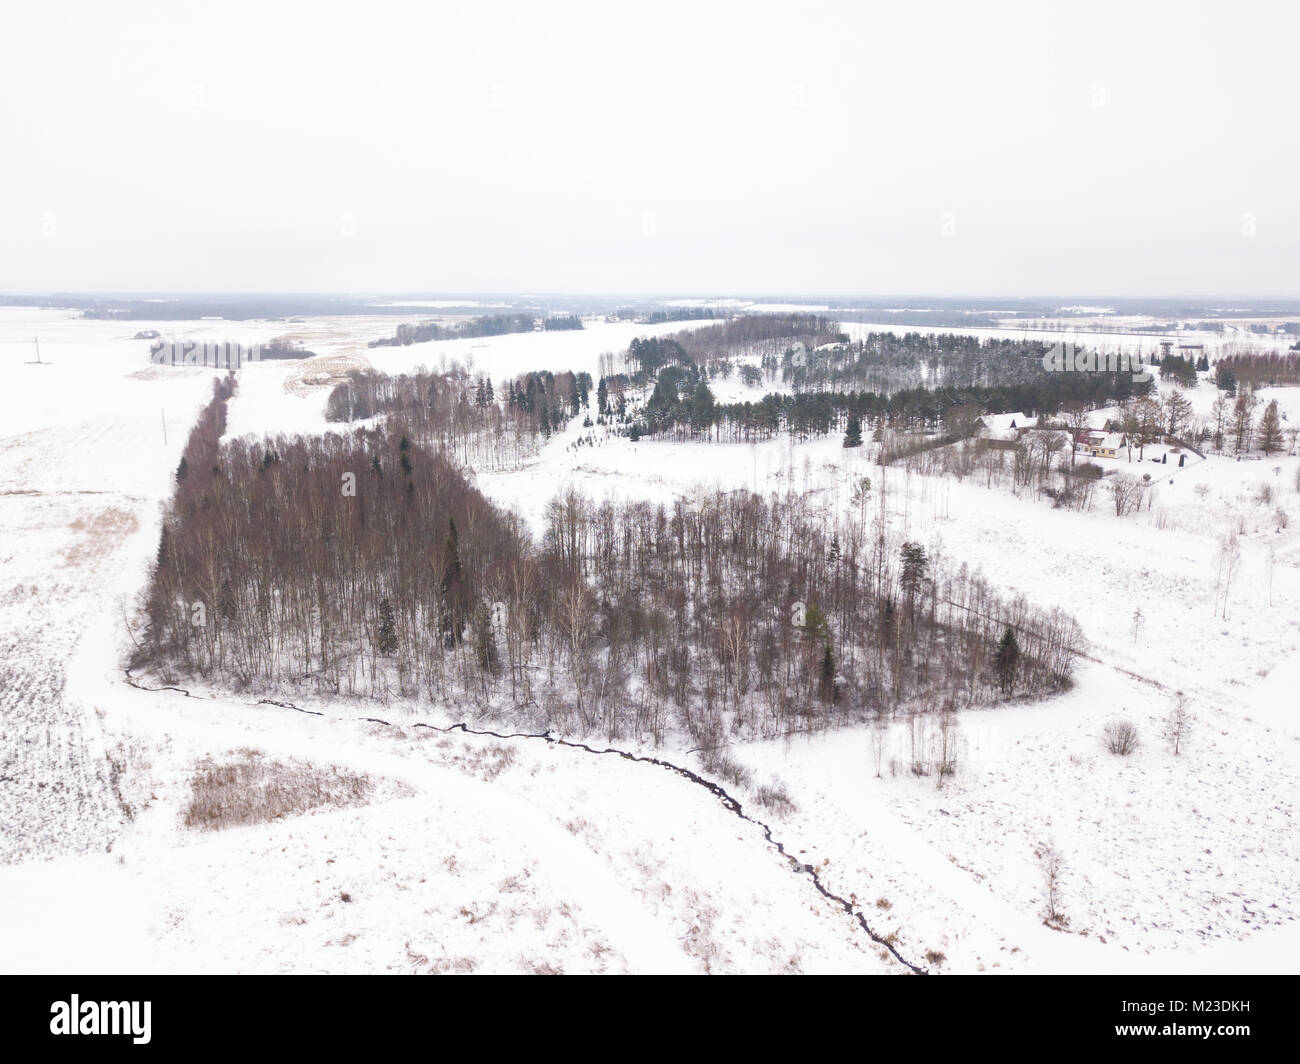 Estonia Tartu Winter High Resolution Stock Photography and Images - Alamy